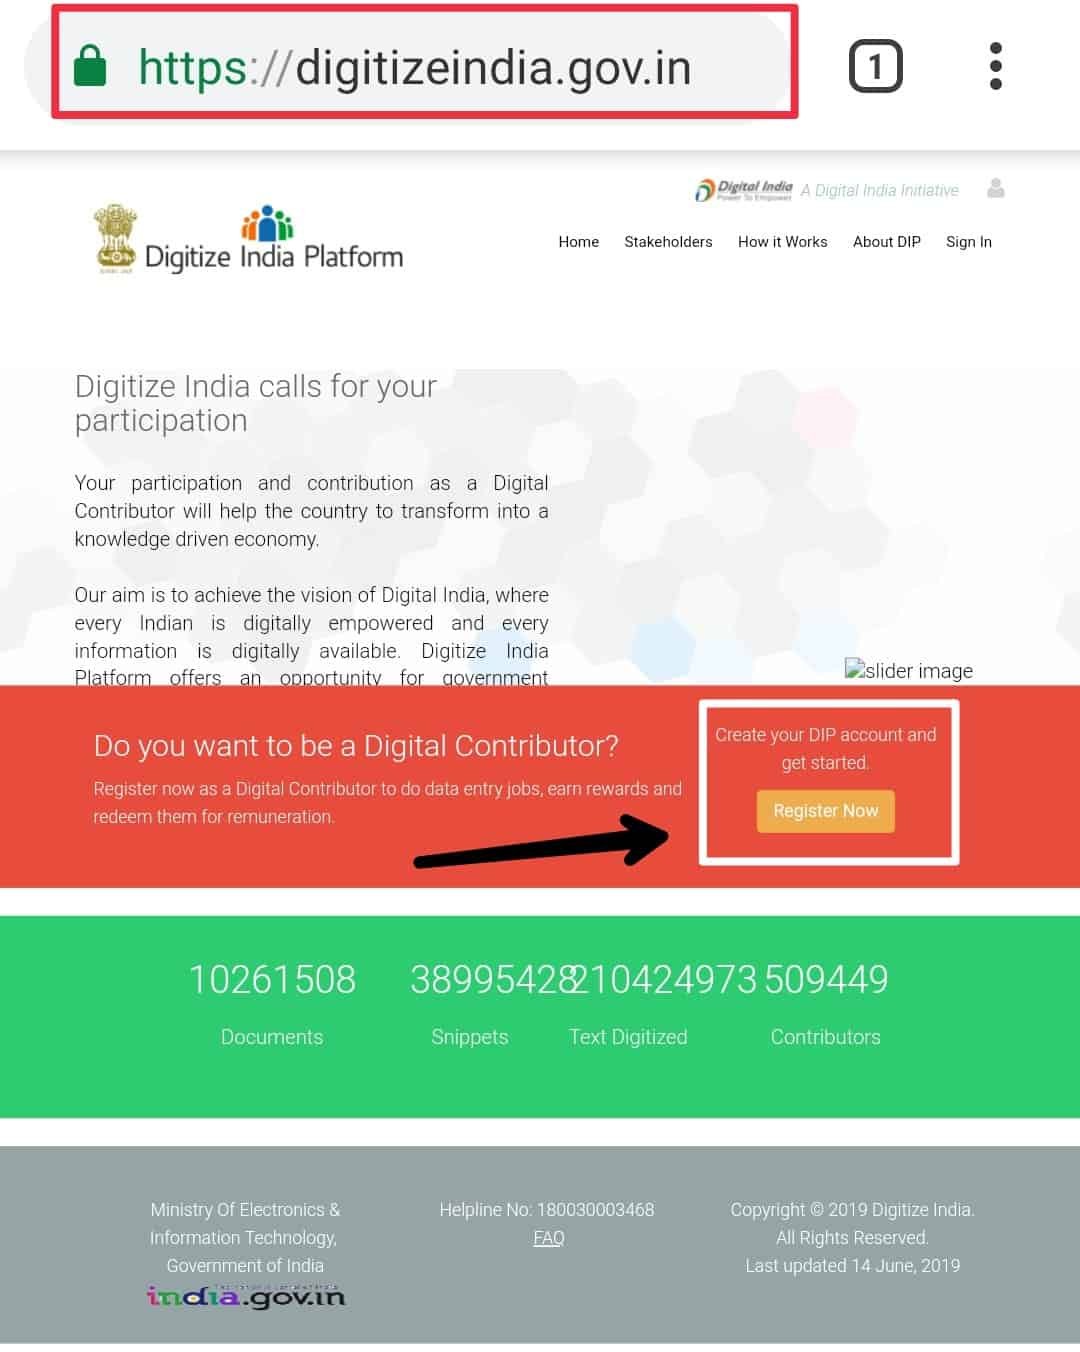 Digitize India Platform